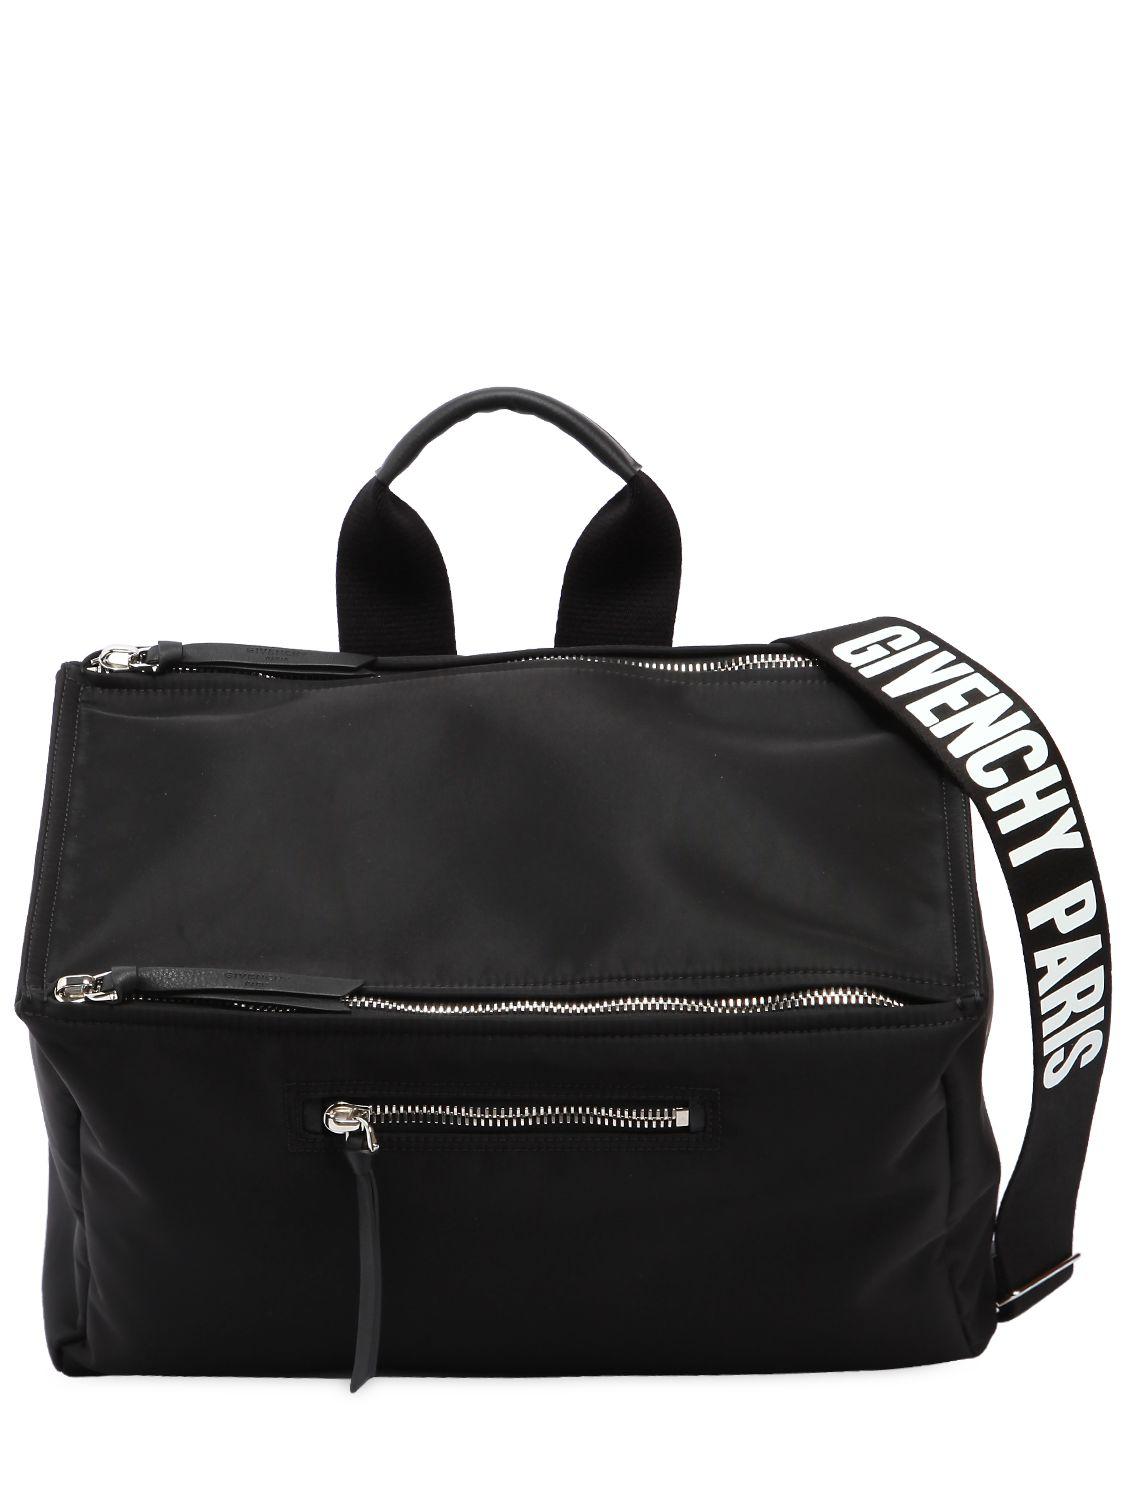 Lyst - Givenchy Pandora Nylon Bag in Black for Men